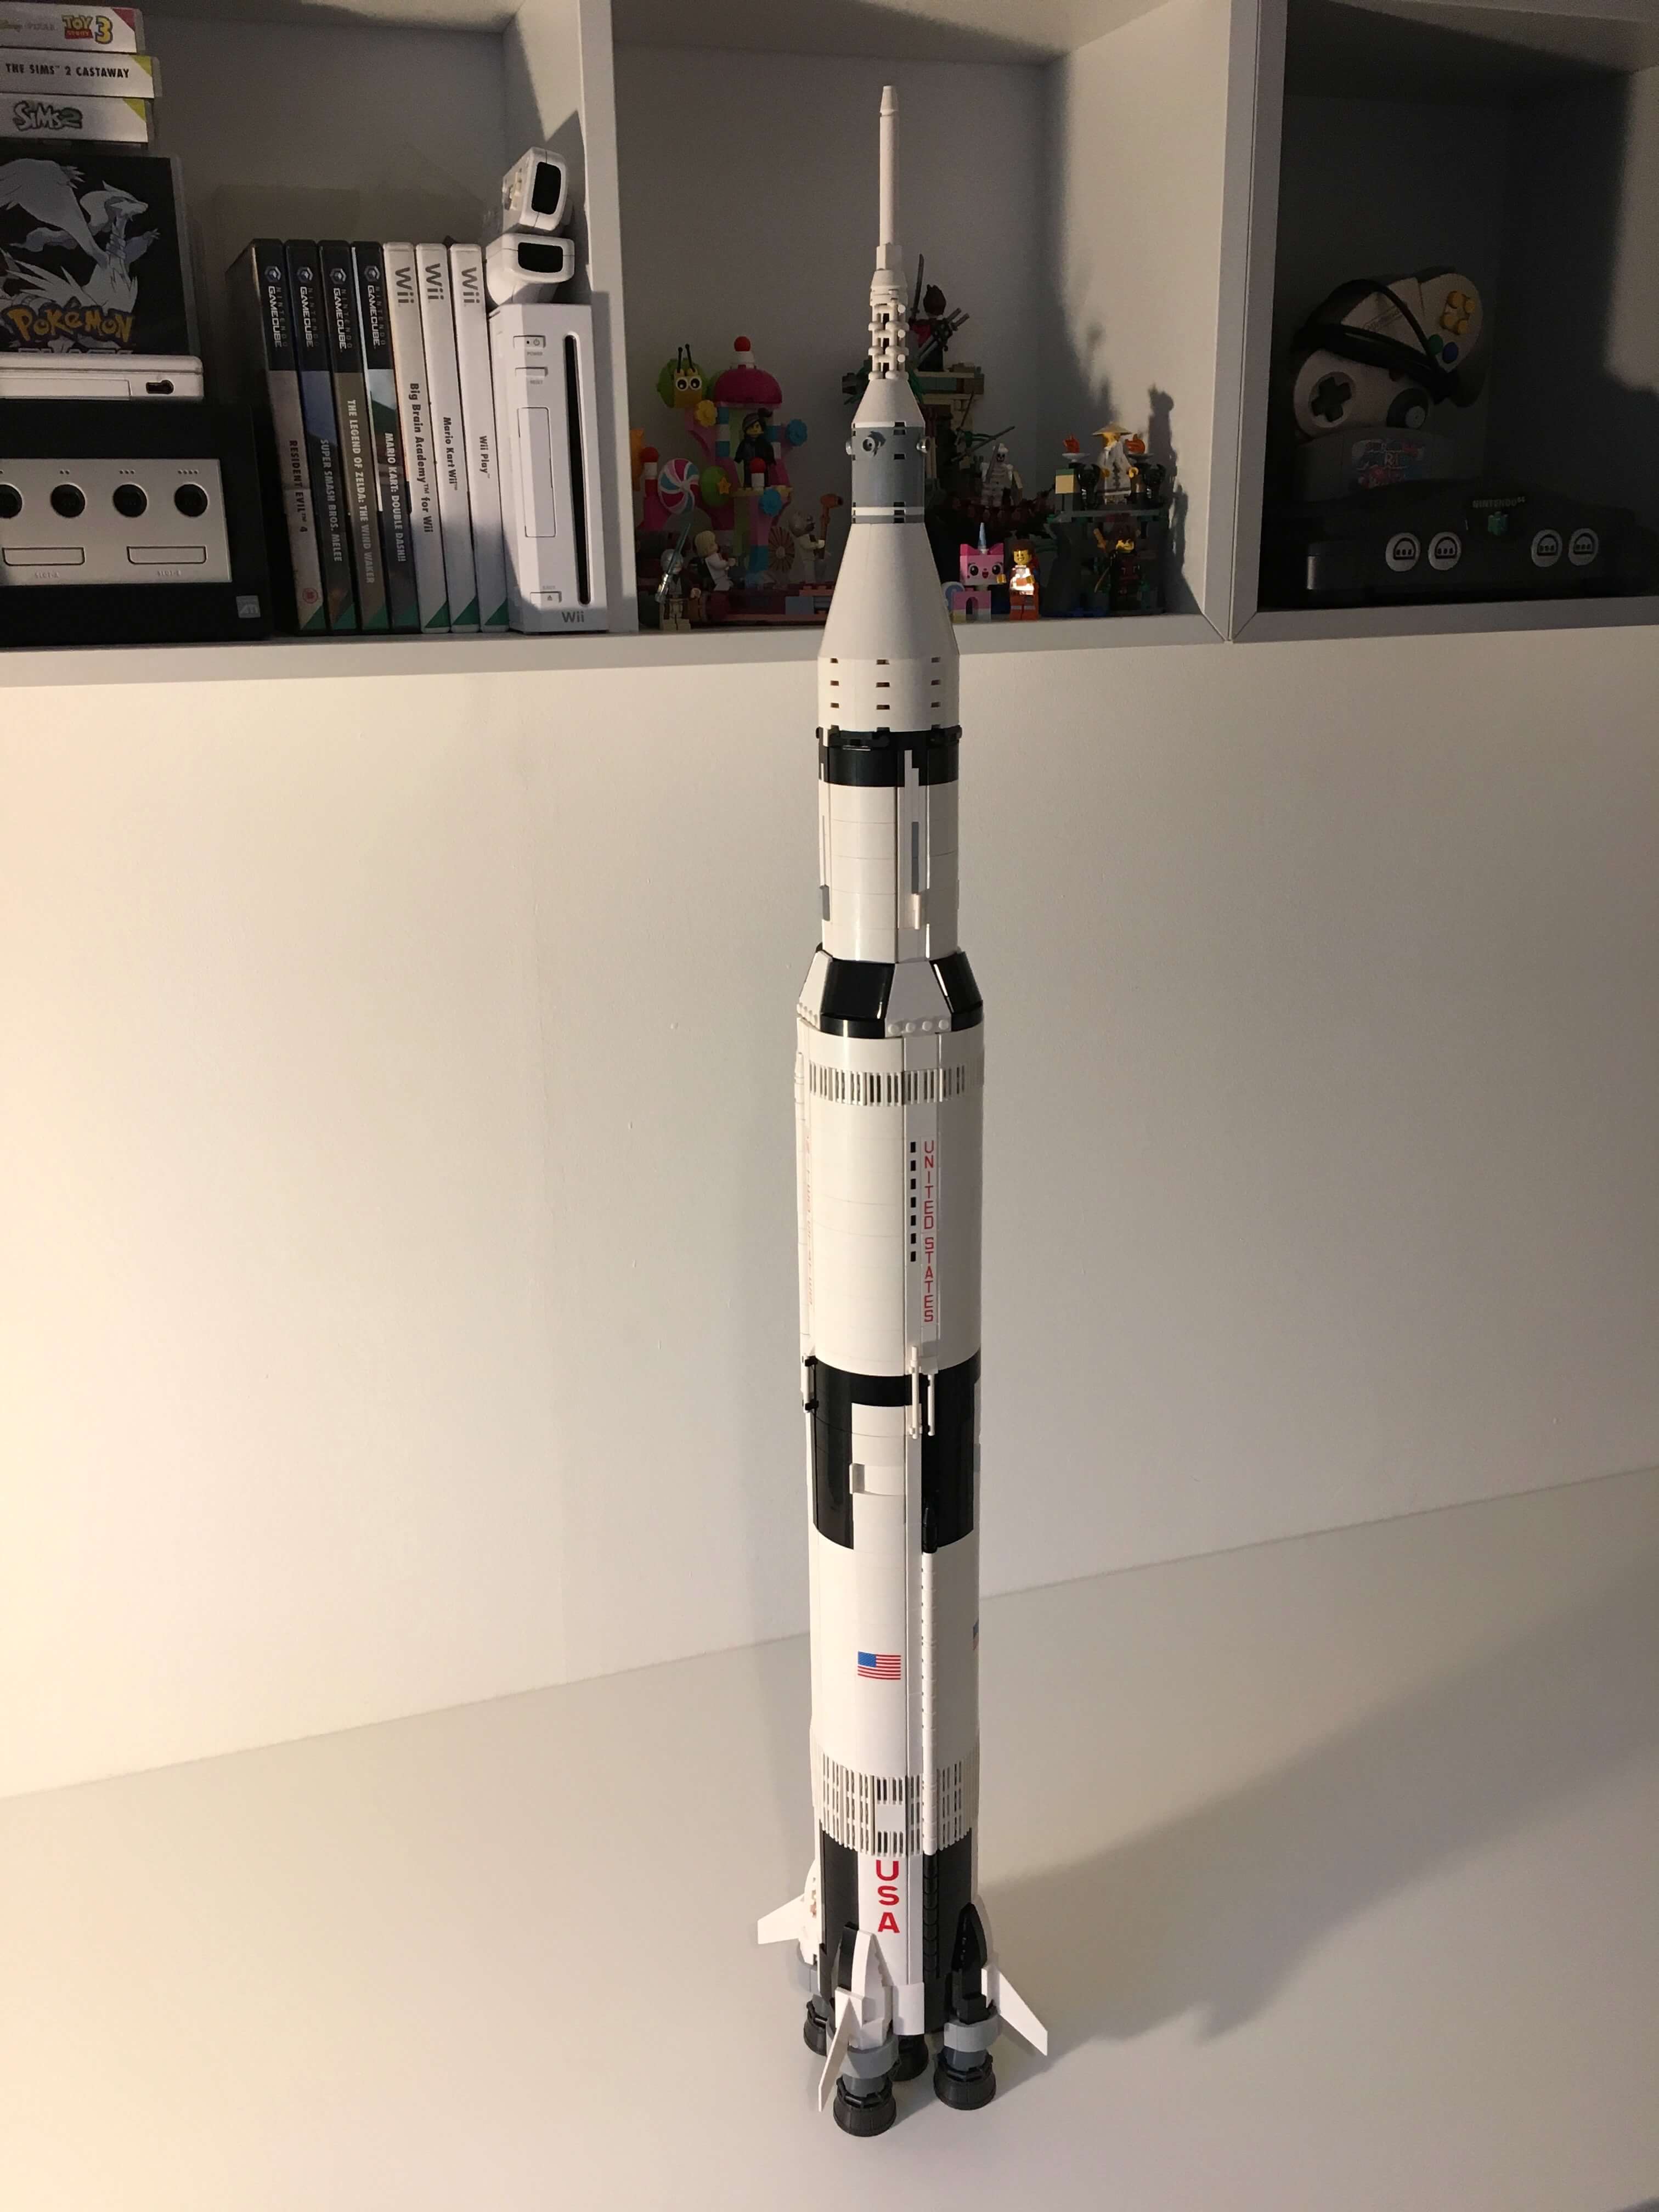 Lego saturn v rocket